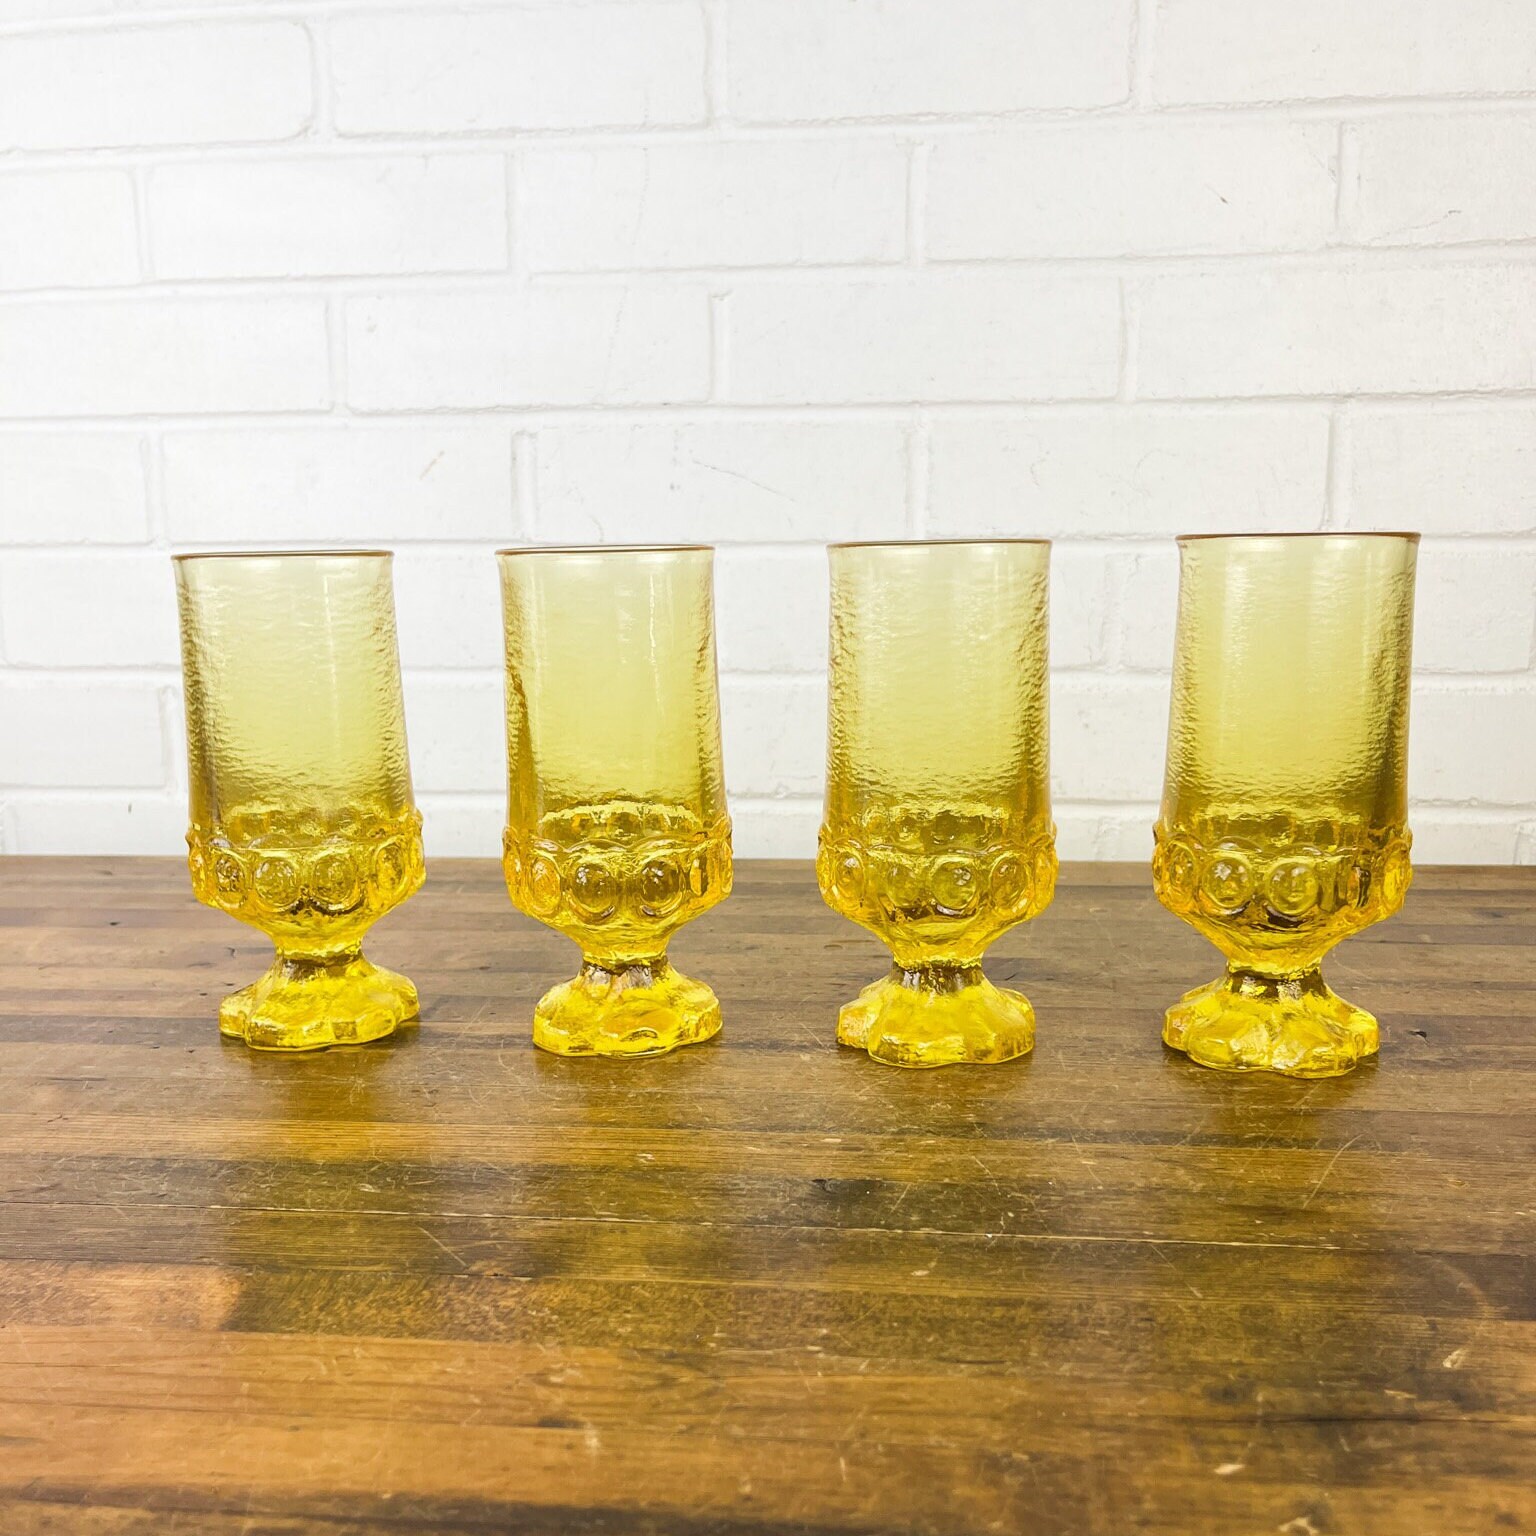 Set of 8 Small Vintage Juice Glasses, Lemonade Glasses, Drinking